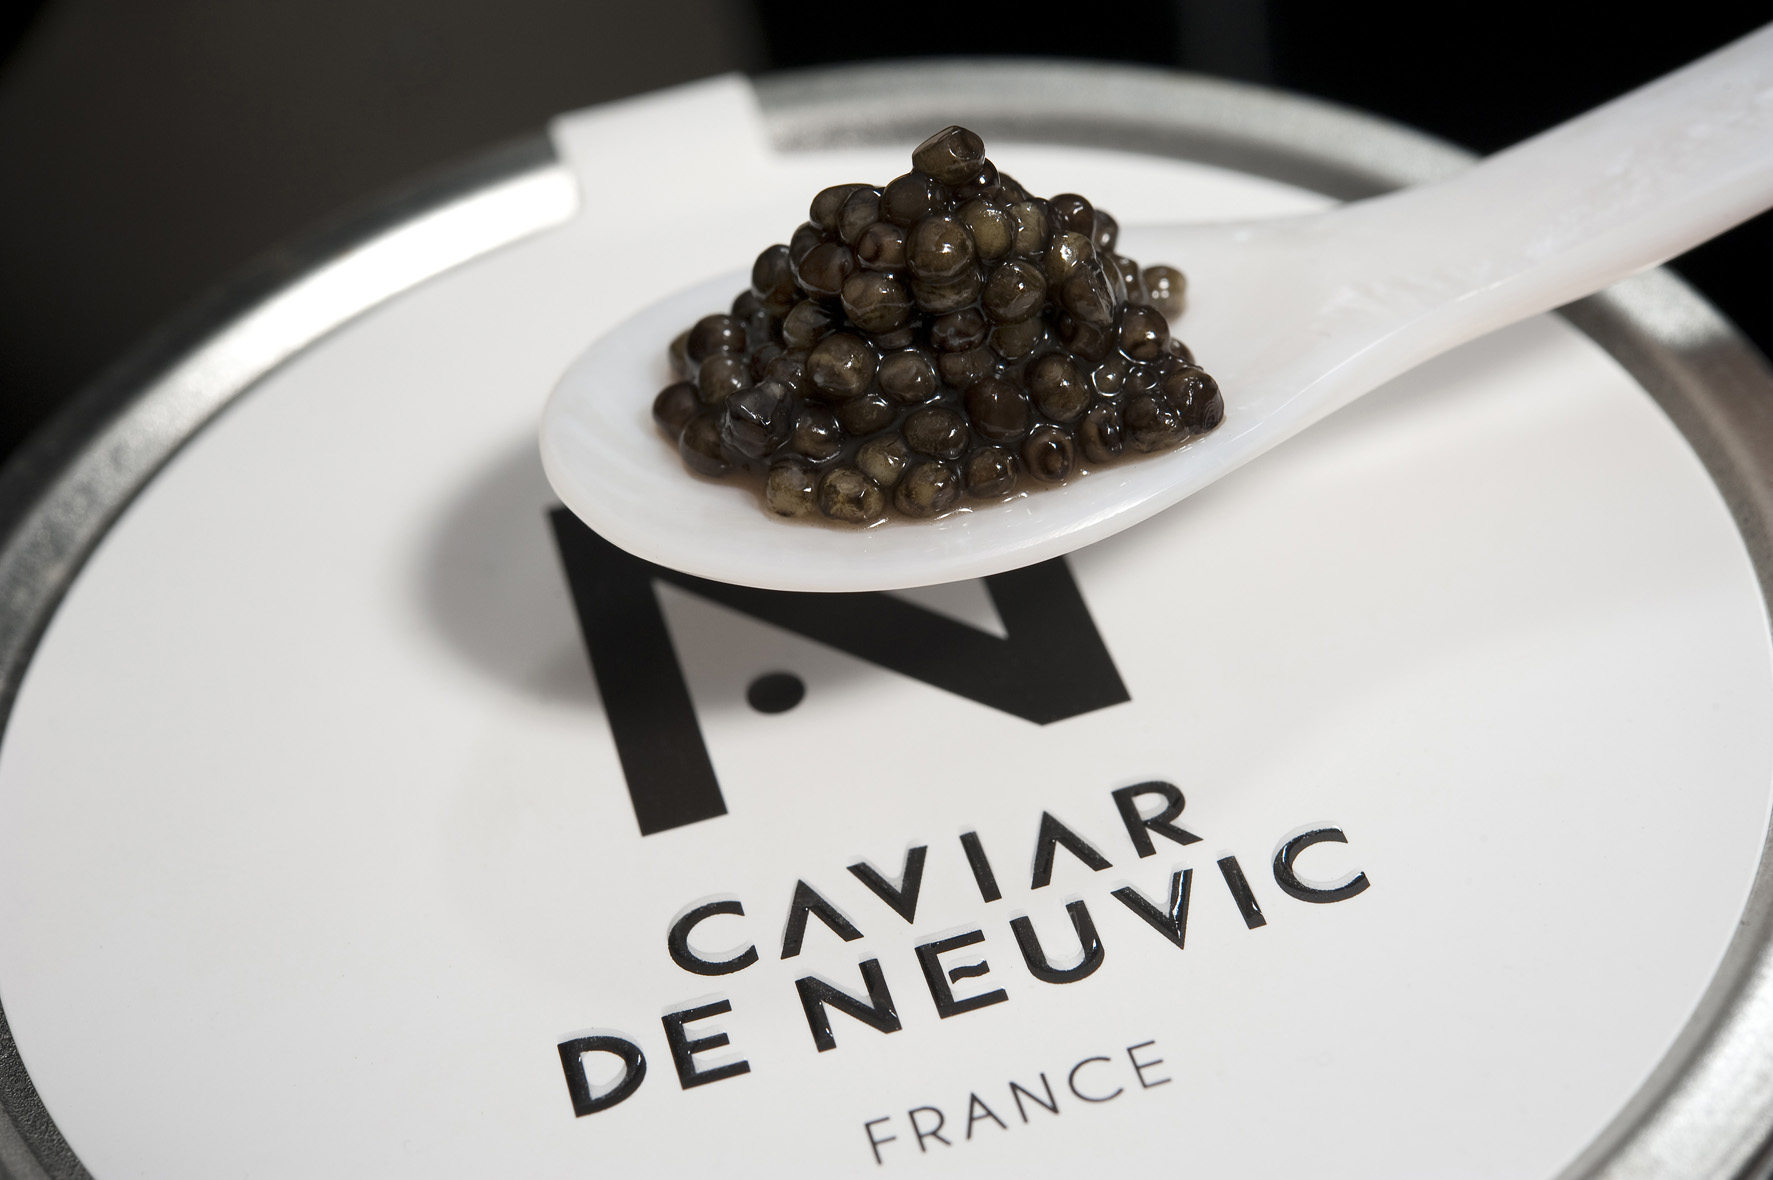 Baeri Signature Caviar